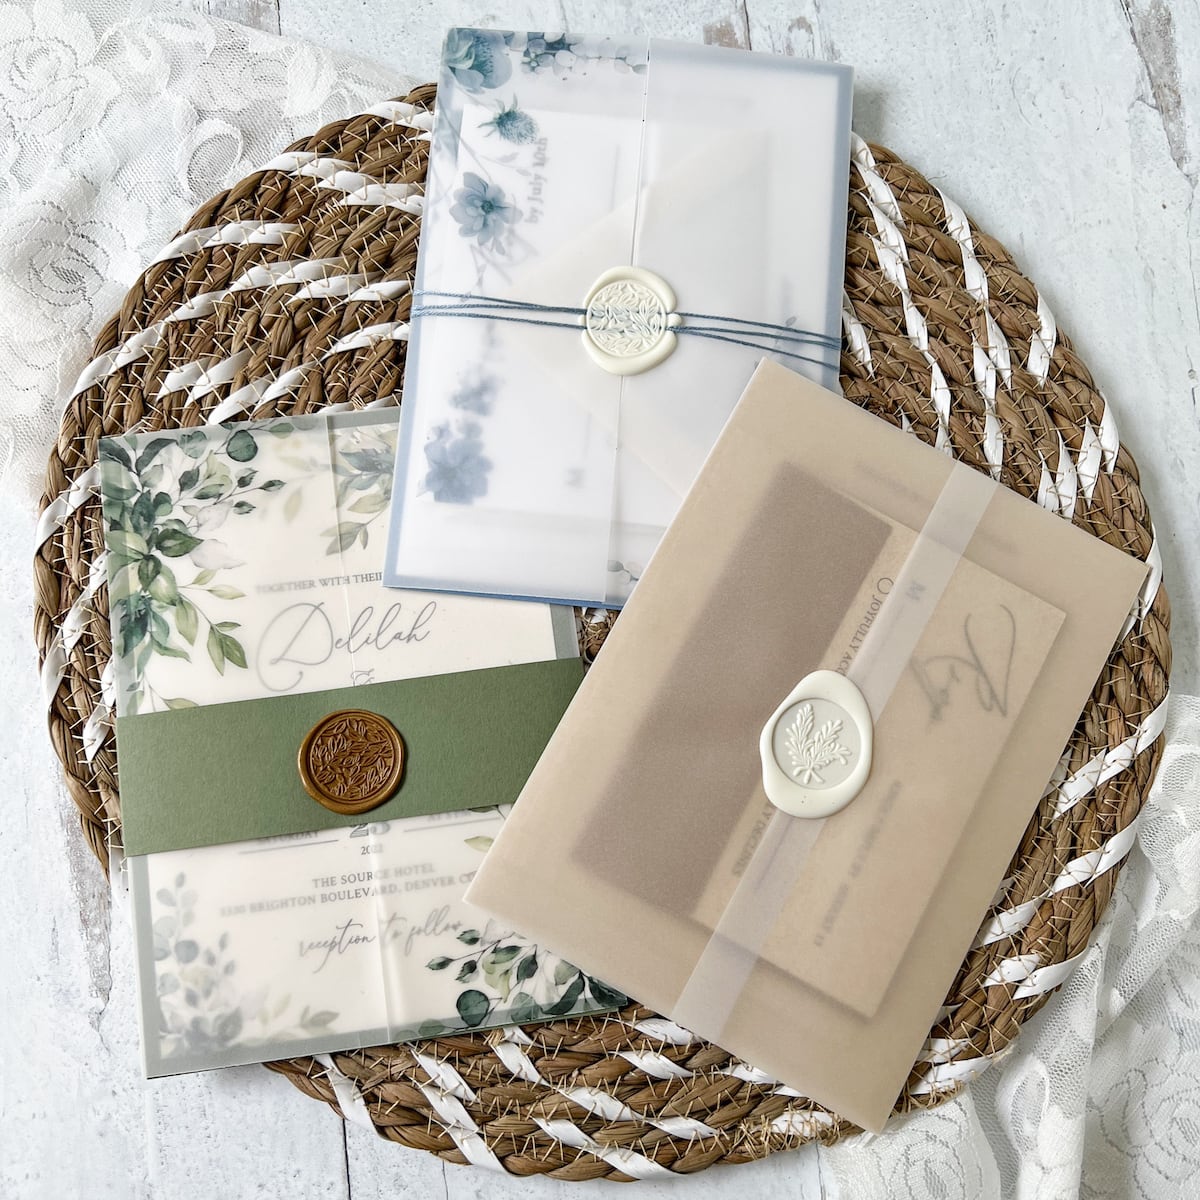 White Clear Envelopes/sliver and Gold Clear Envelopes / Glassine  Envelopes/gift Packing 